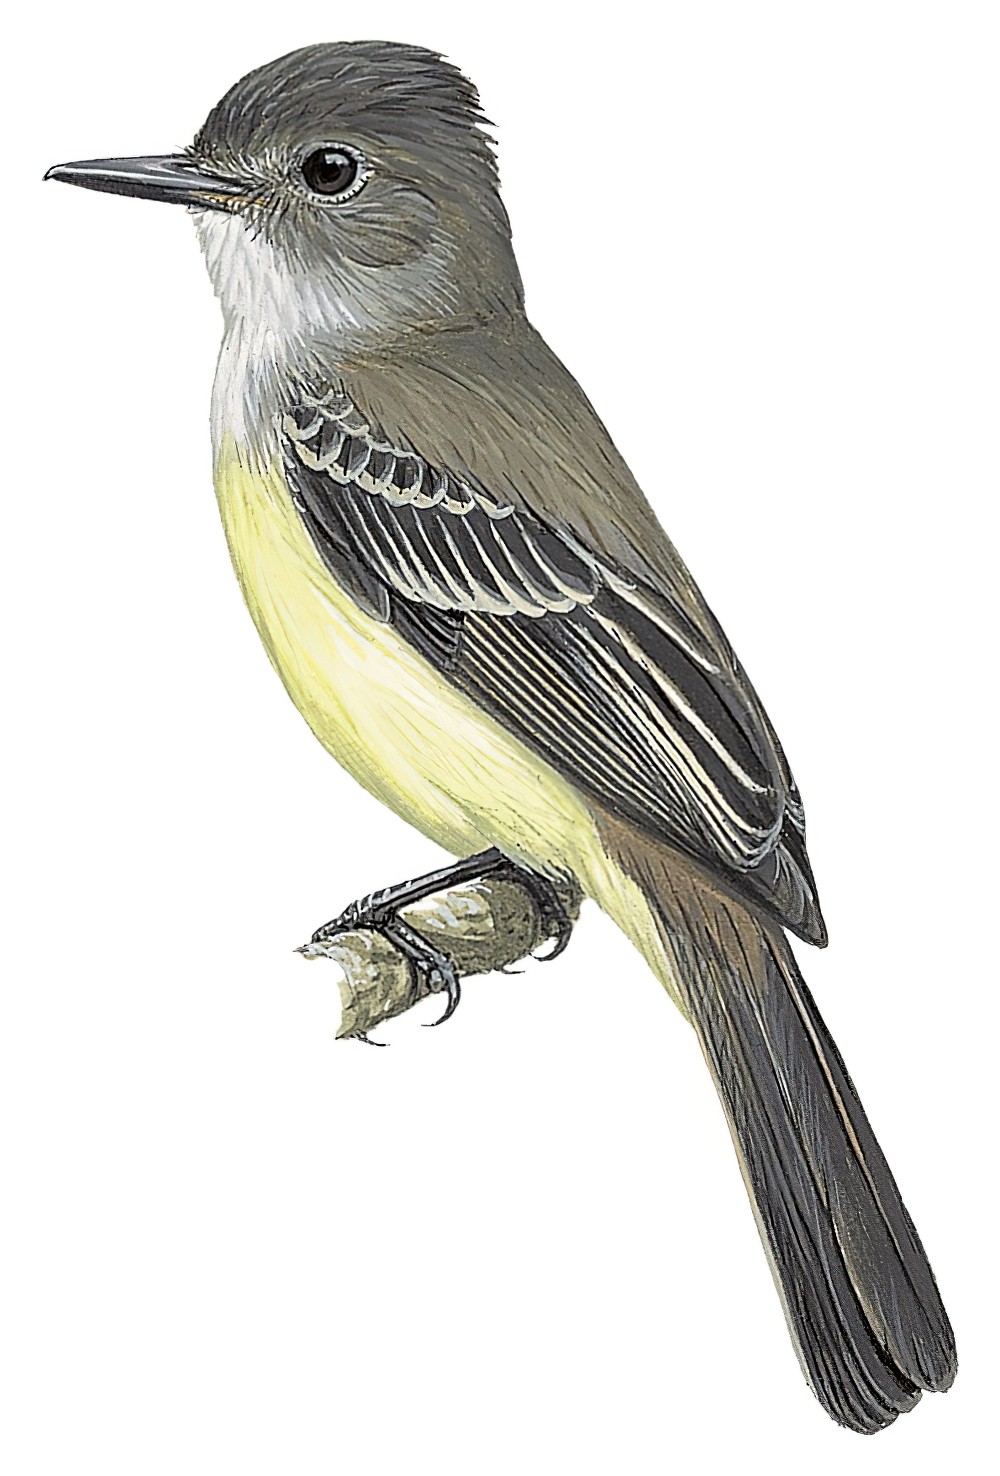 Short-crested Flycatcher / Myiarchus ferox